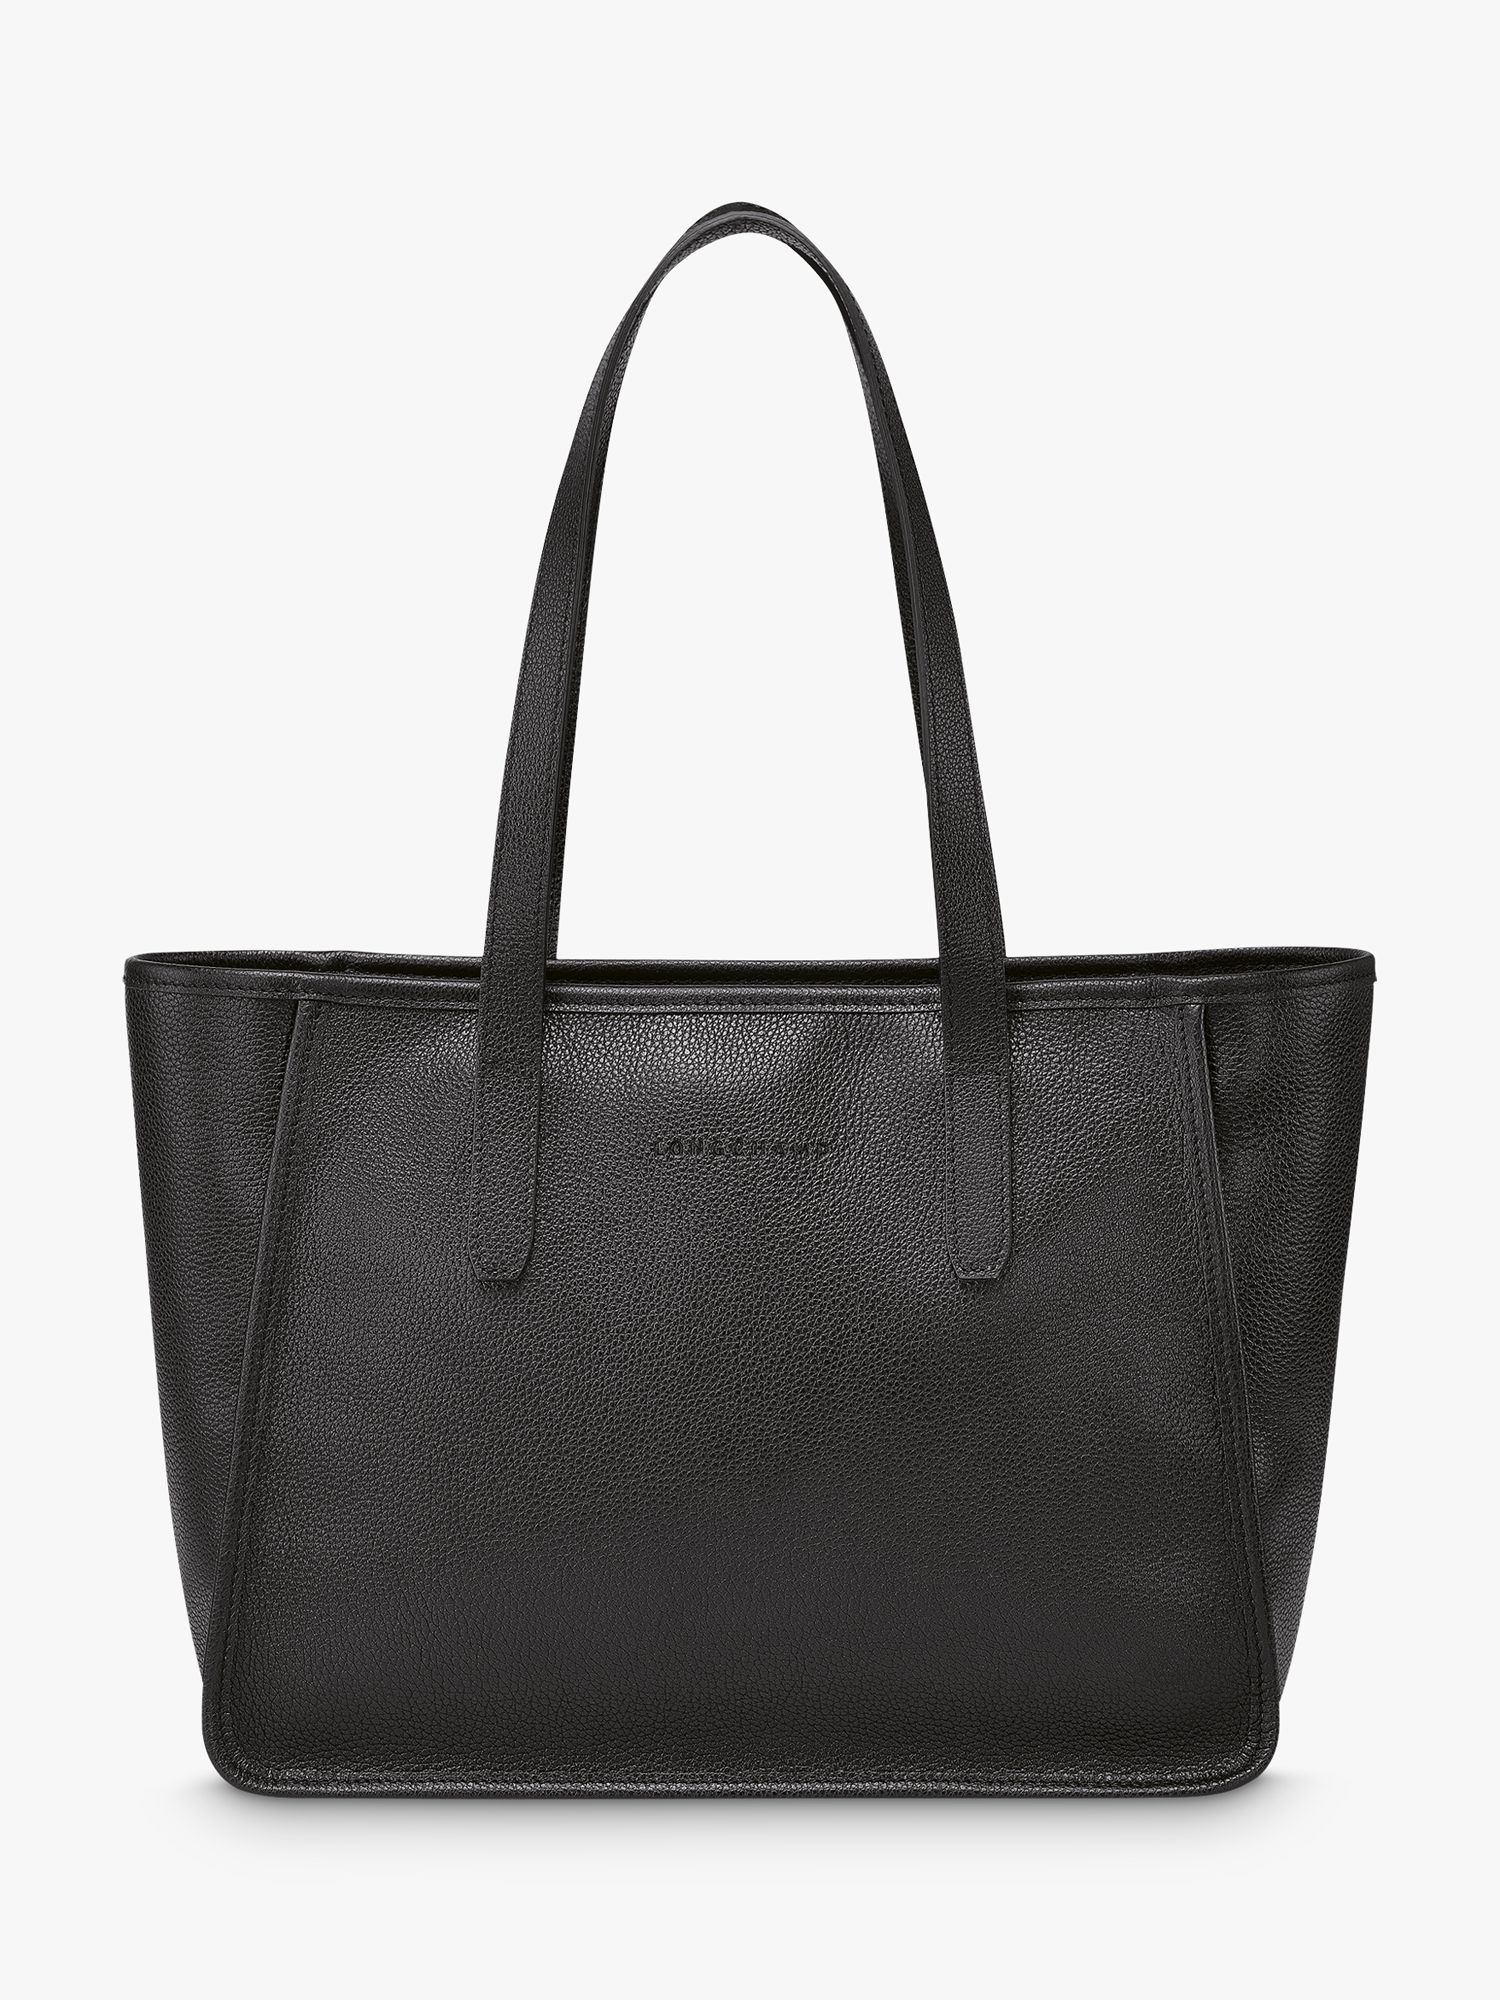 Longchamp Le Foulonne Tote Bag, Black at John Lewis & Partners